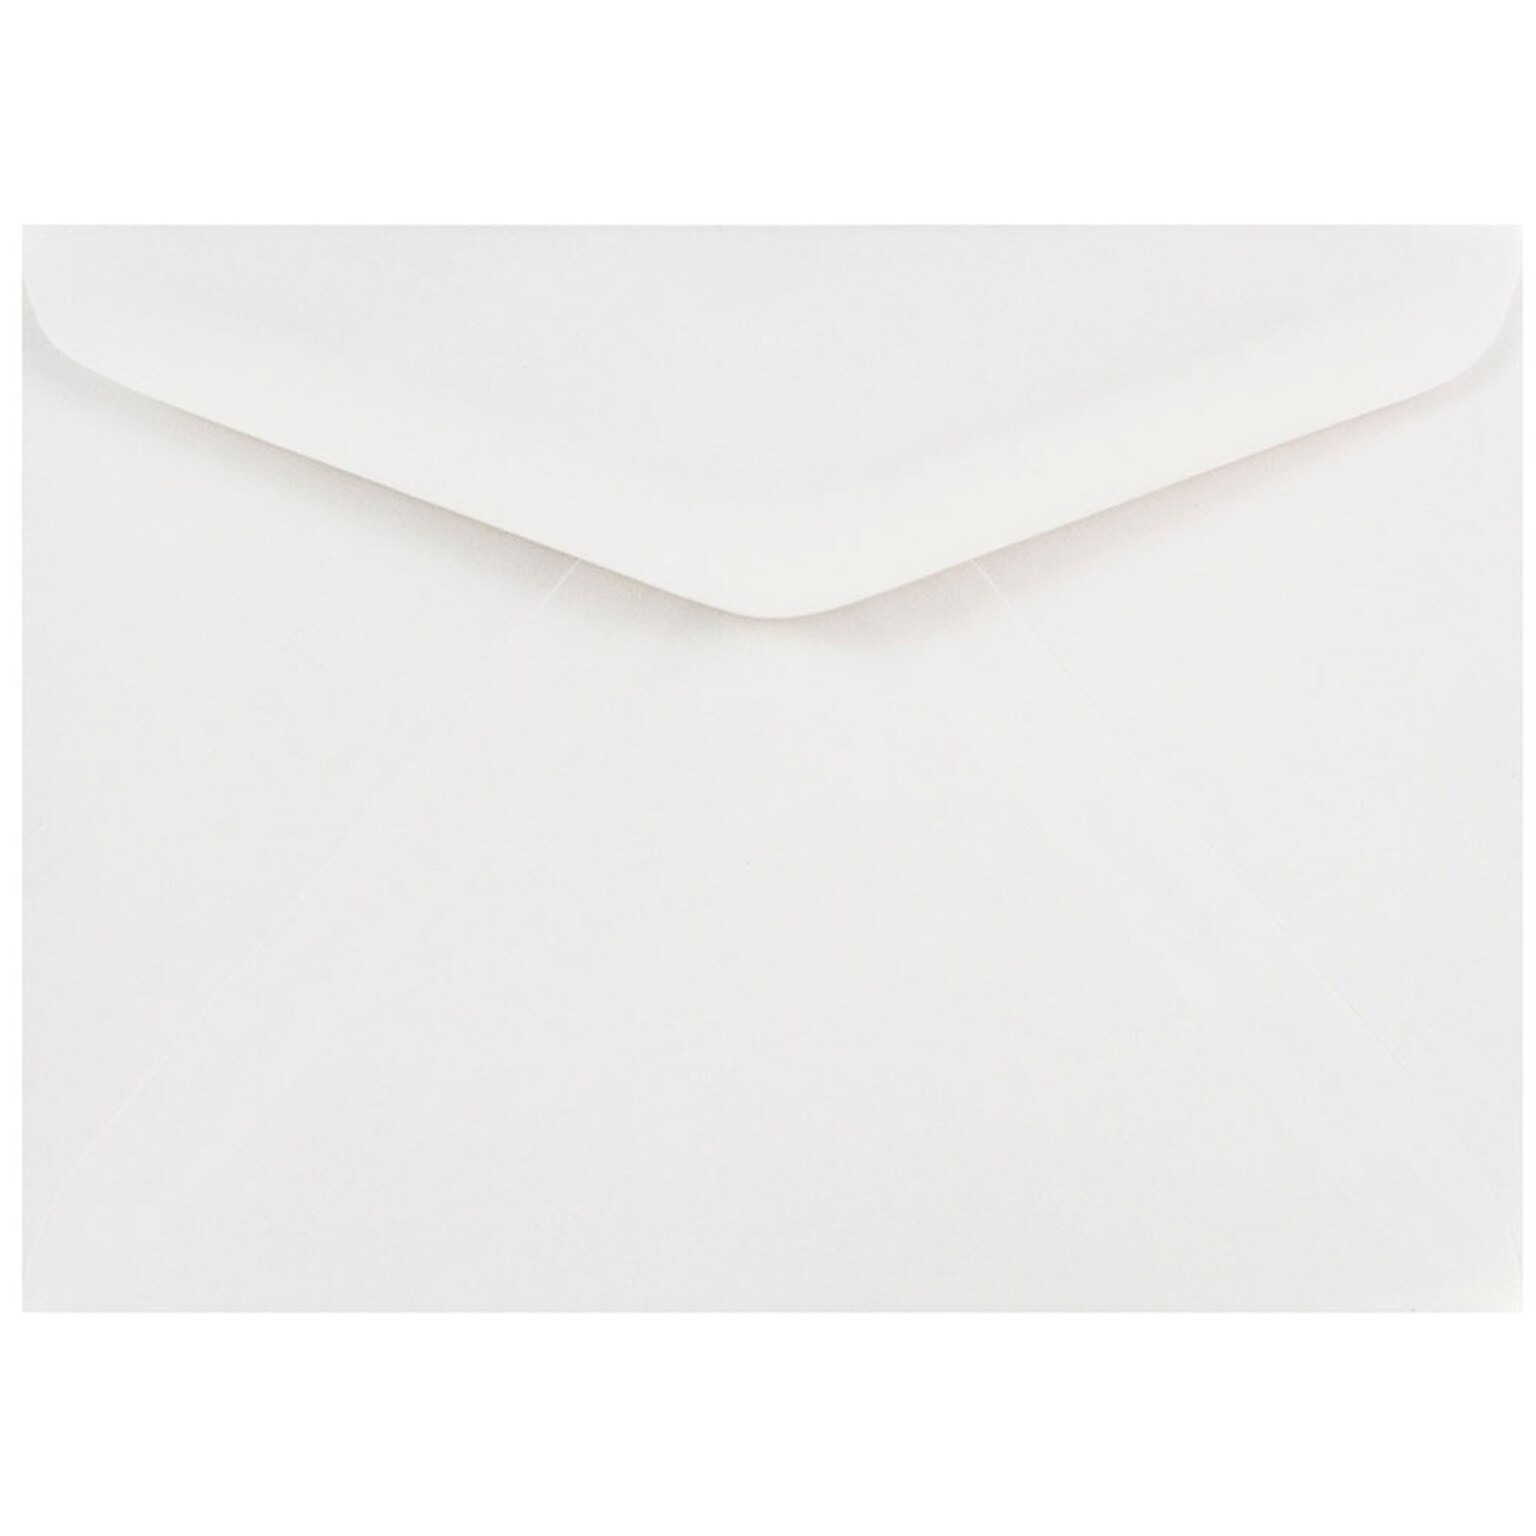 JAM Paper A7 Invitation Envelopes with V-Flap, 5.25 x 7.25, White, 25/Pack (4023210)